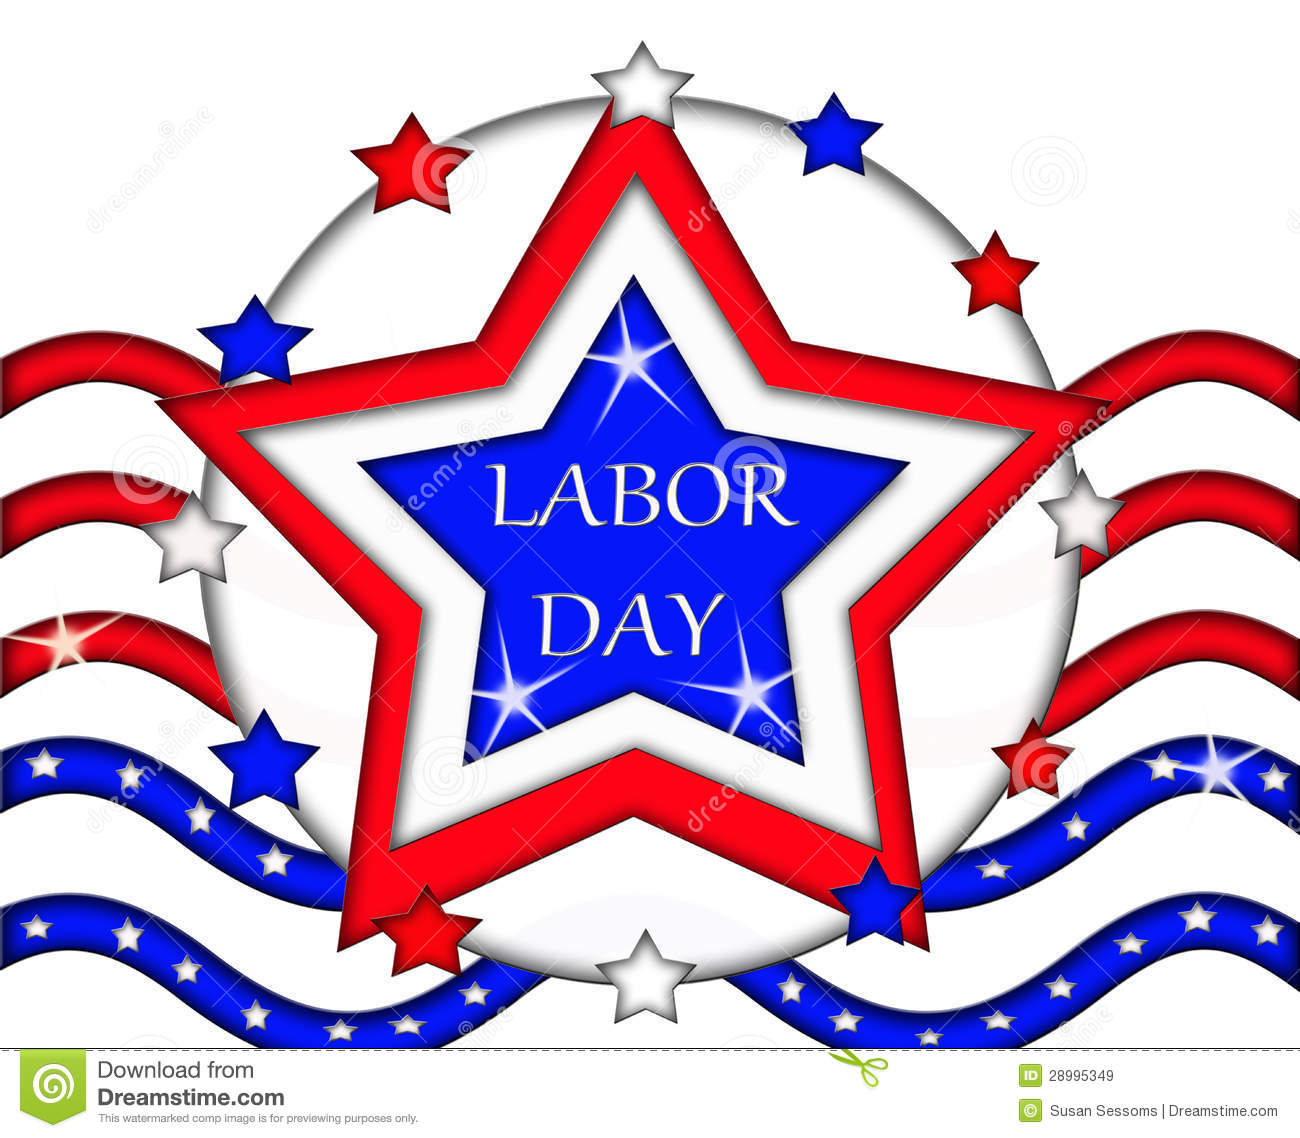 Labor day flag.